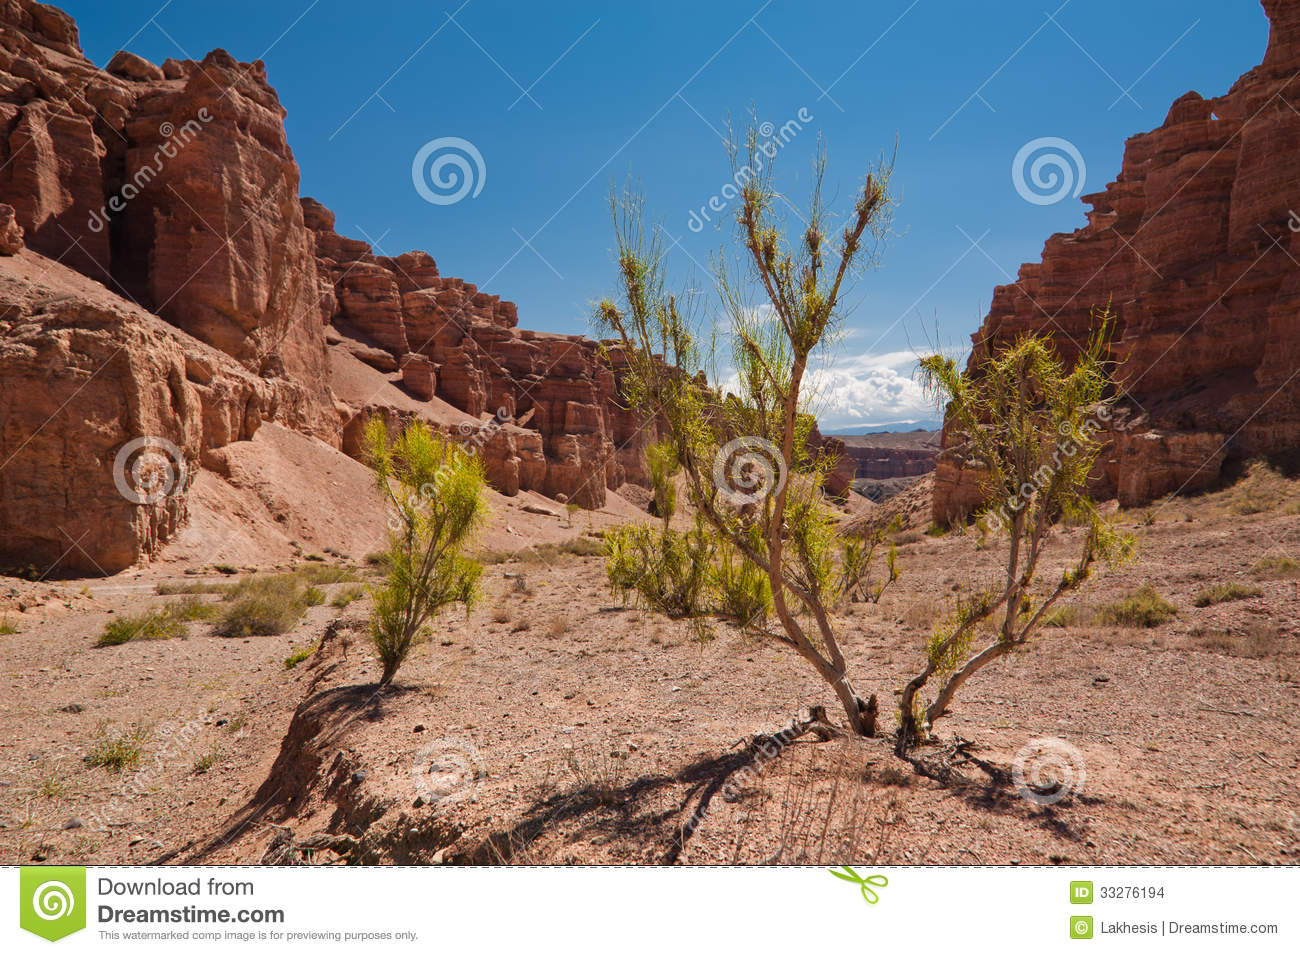 Desert Plant Shrub Saxaul  Haloxylon  Growing Among Rock Formations At